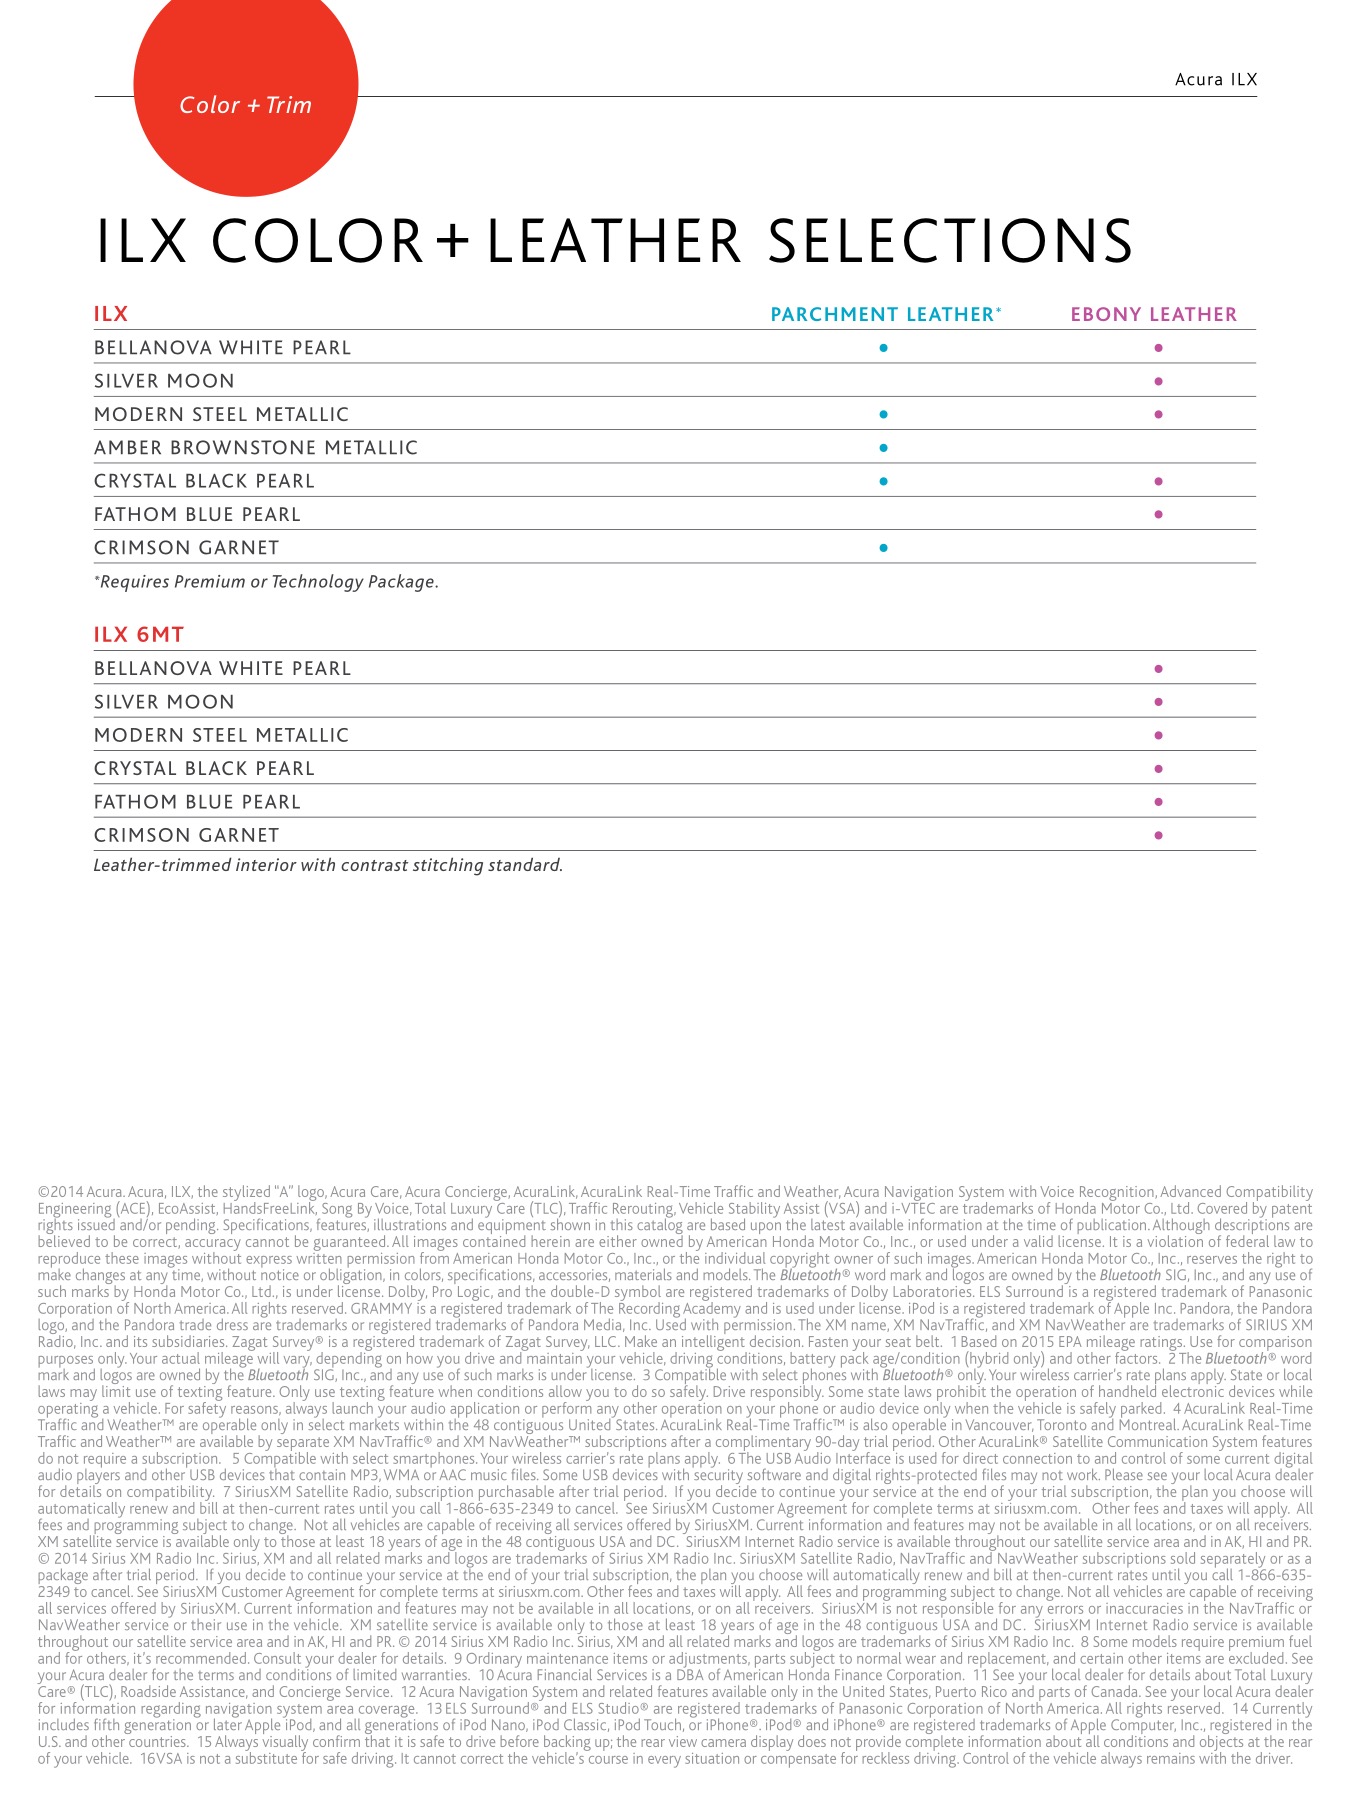 2015 Acura ILX Brochure Page 19